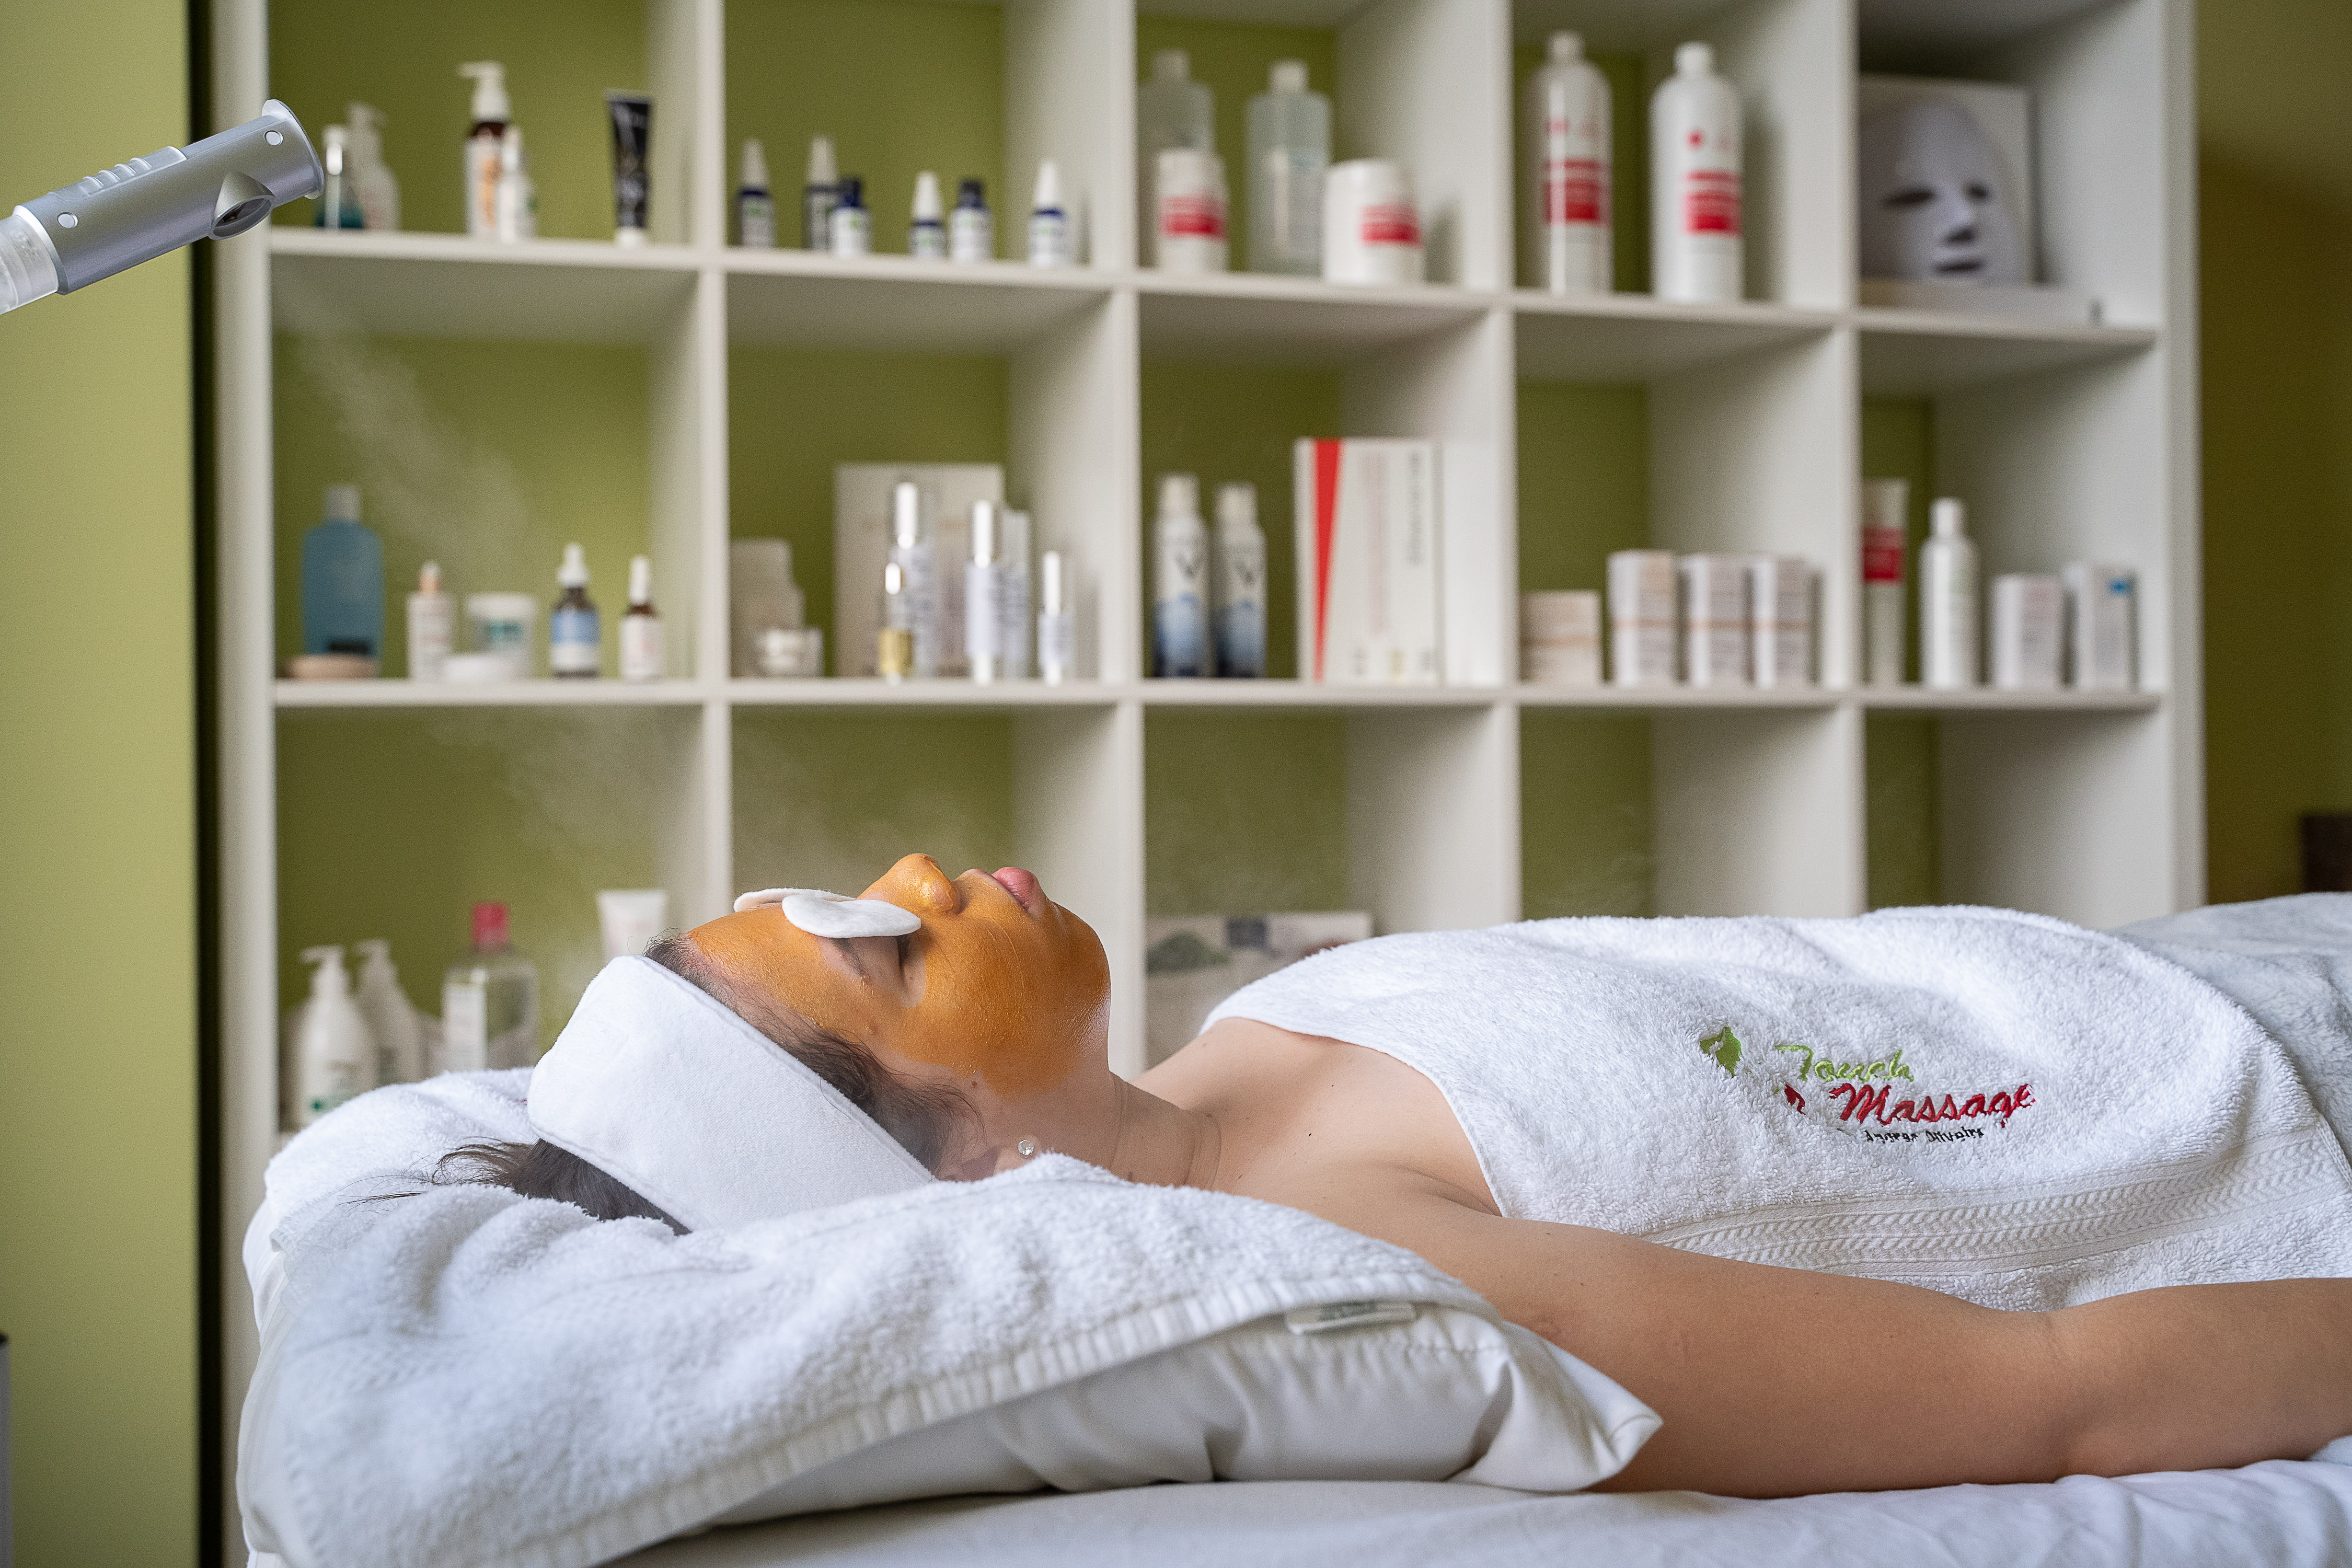 Touch Massage oferece diversos tratamentos estéticos